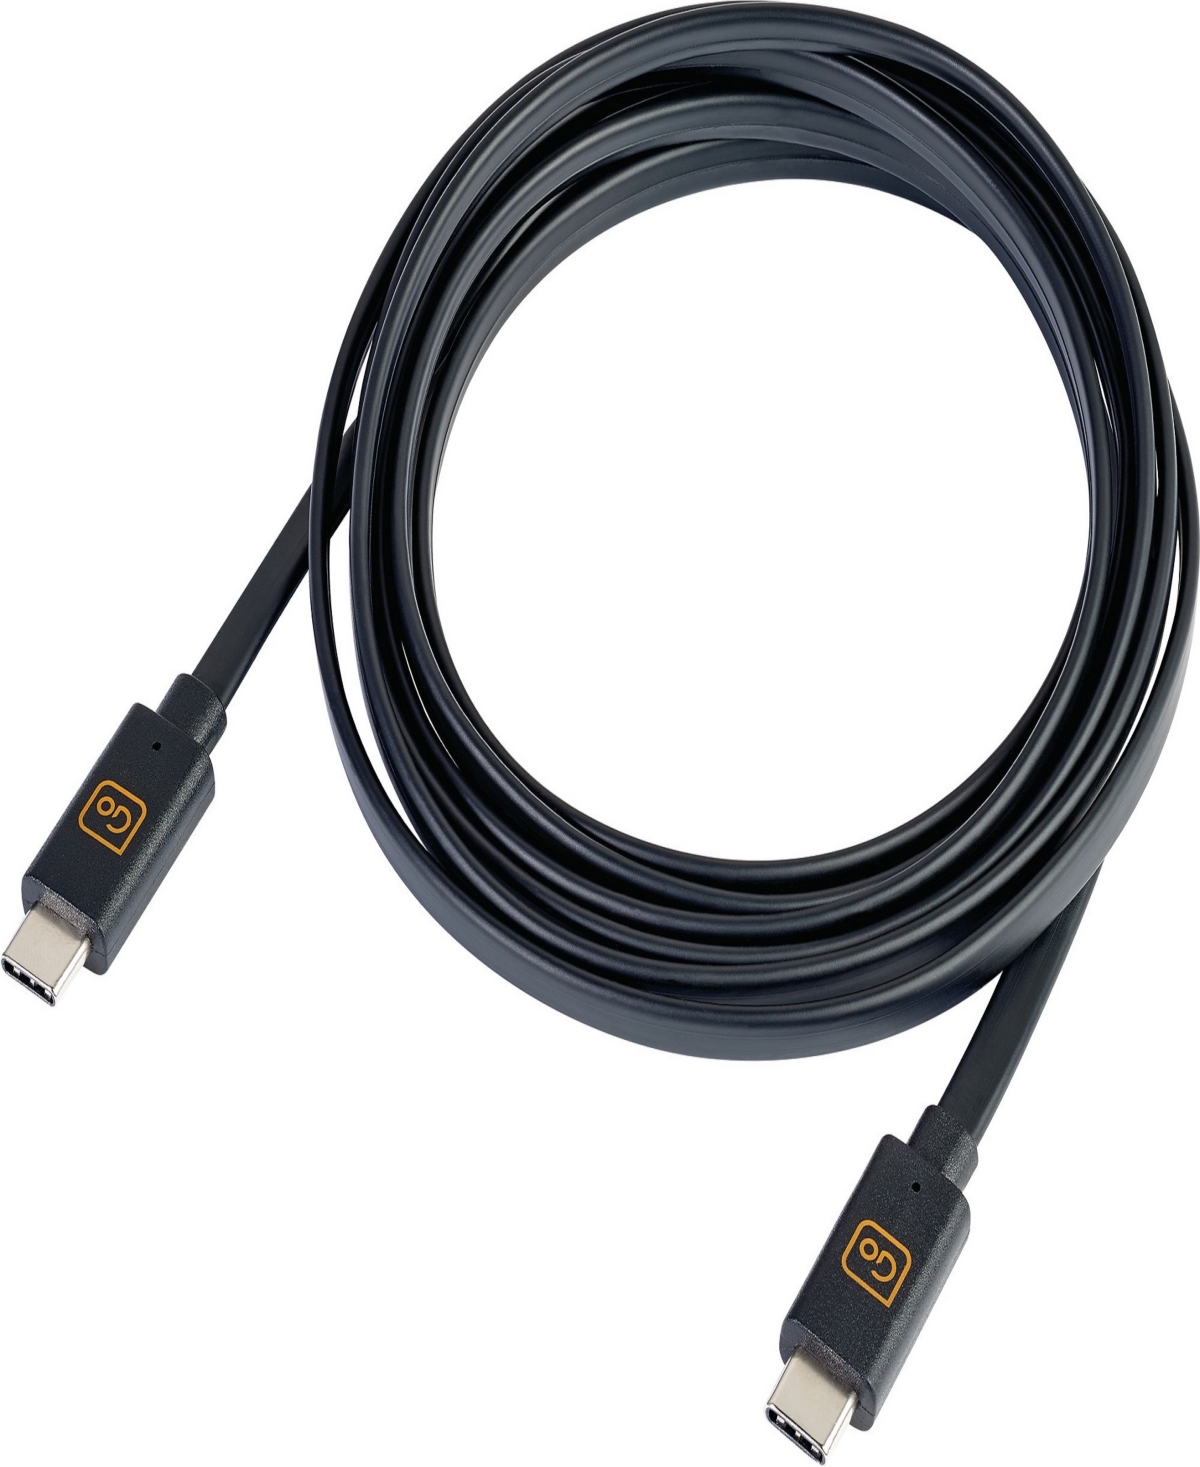 2M Usb C-Cable - Black